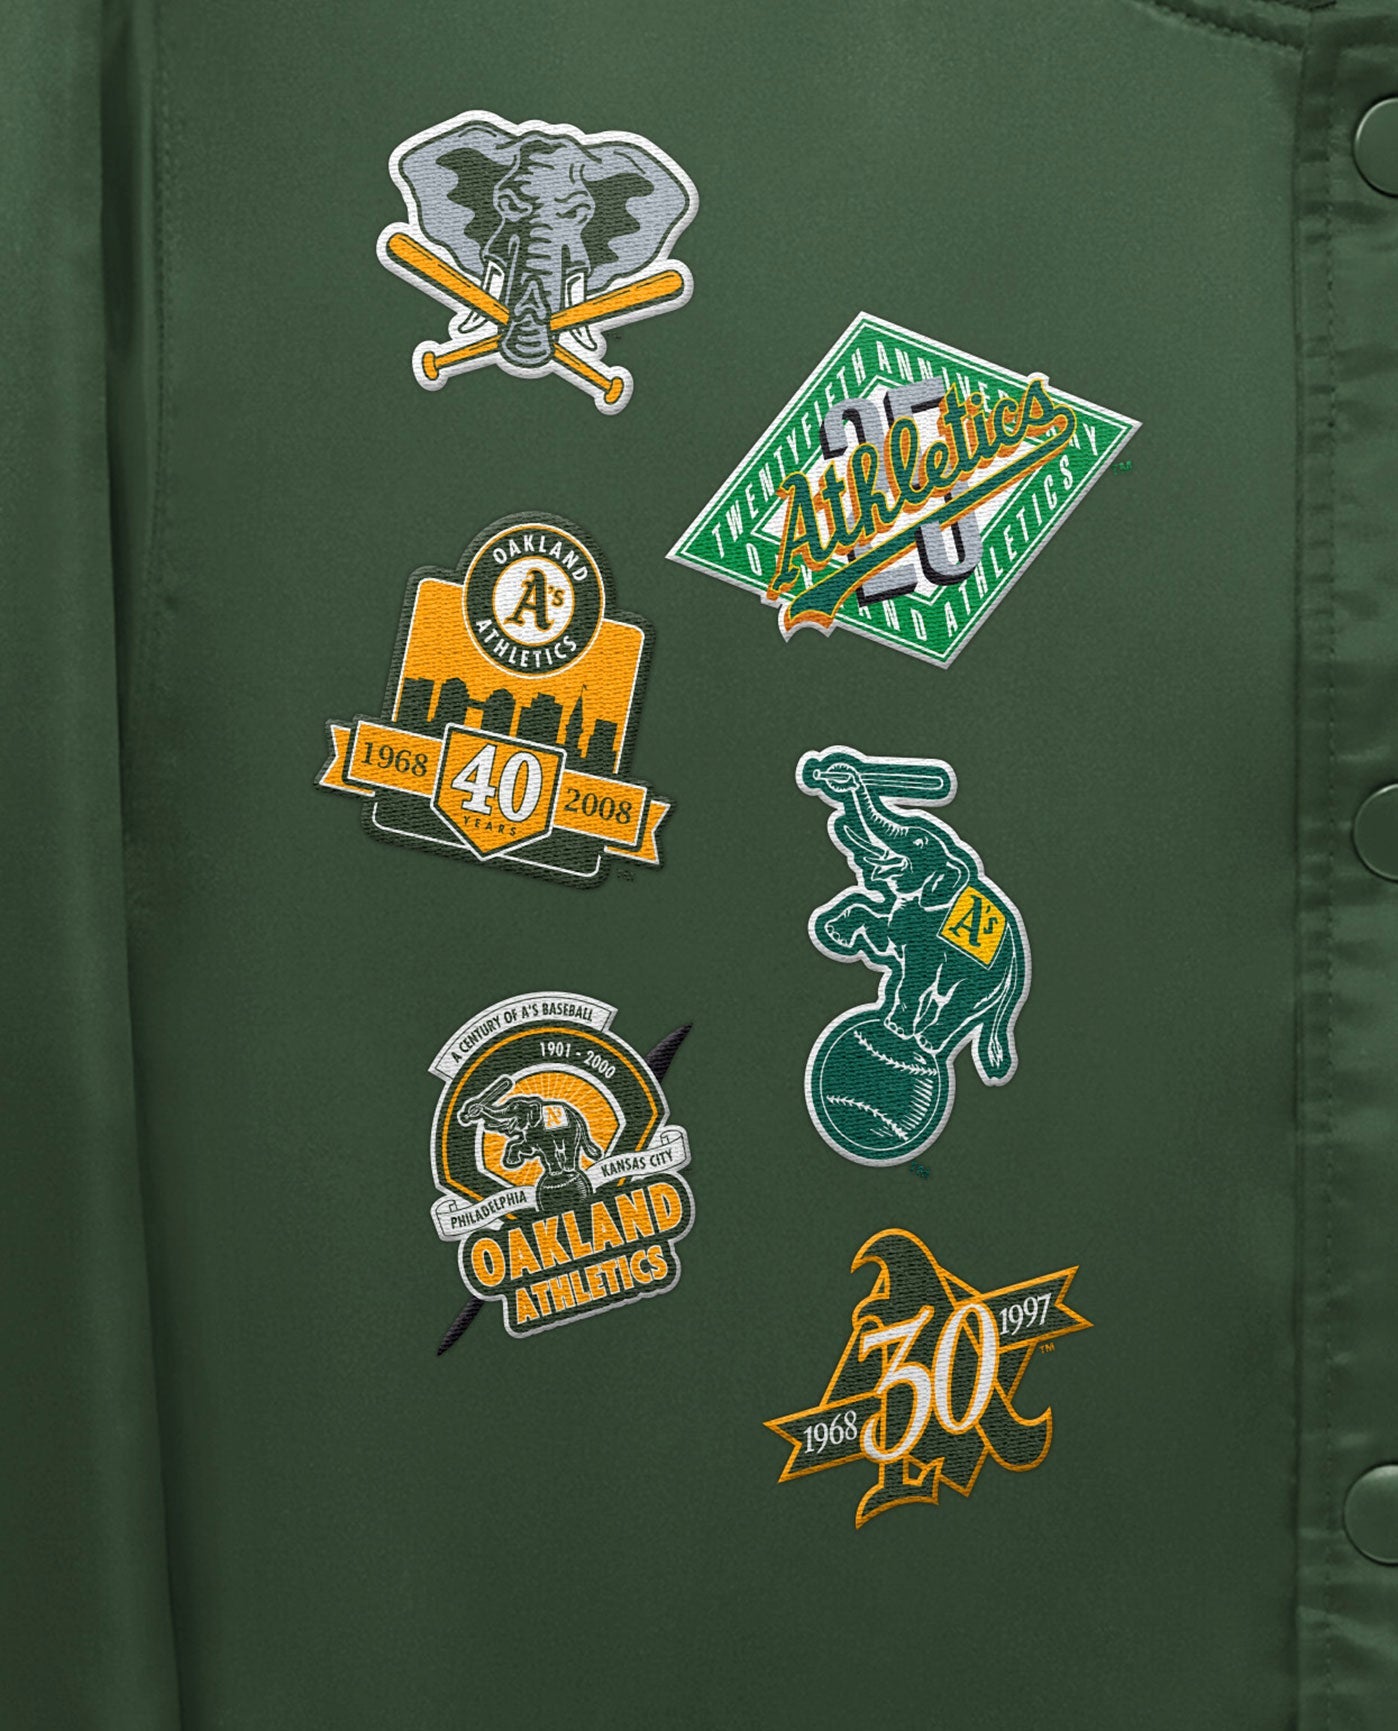 Starter Green Oakland Athletics Varsity Satin Full-Snap Jacket XXL / Athletics Green